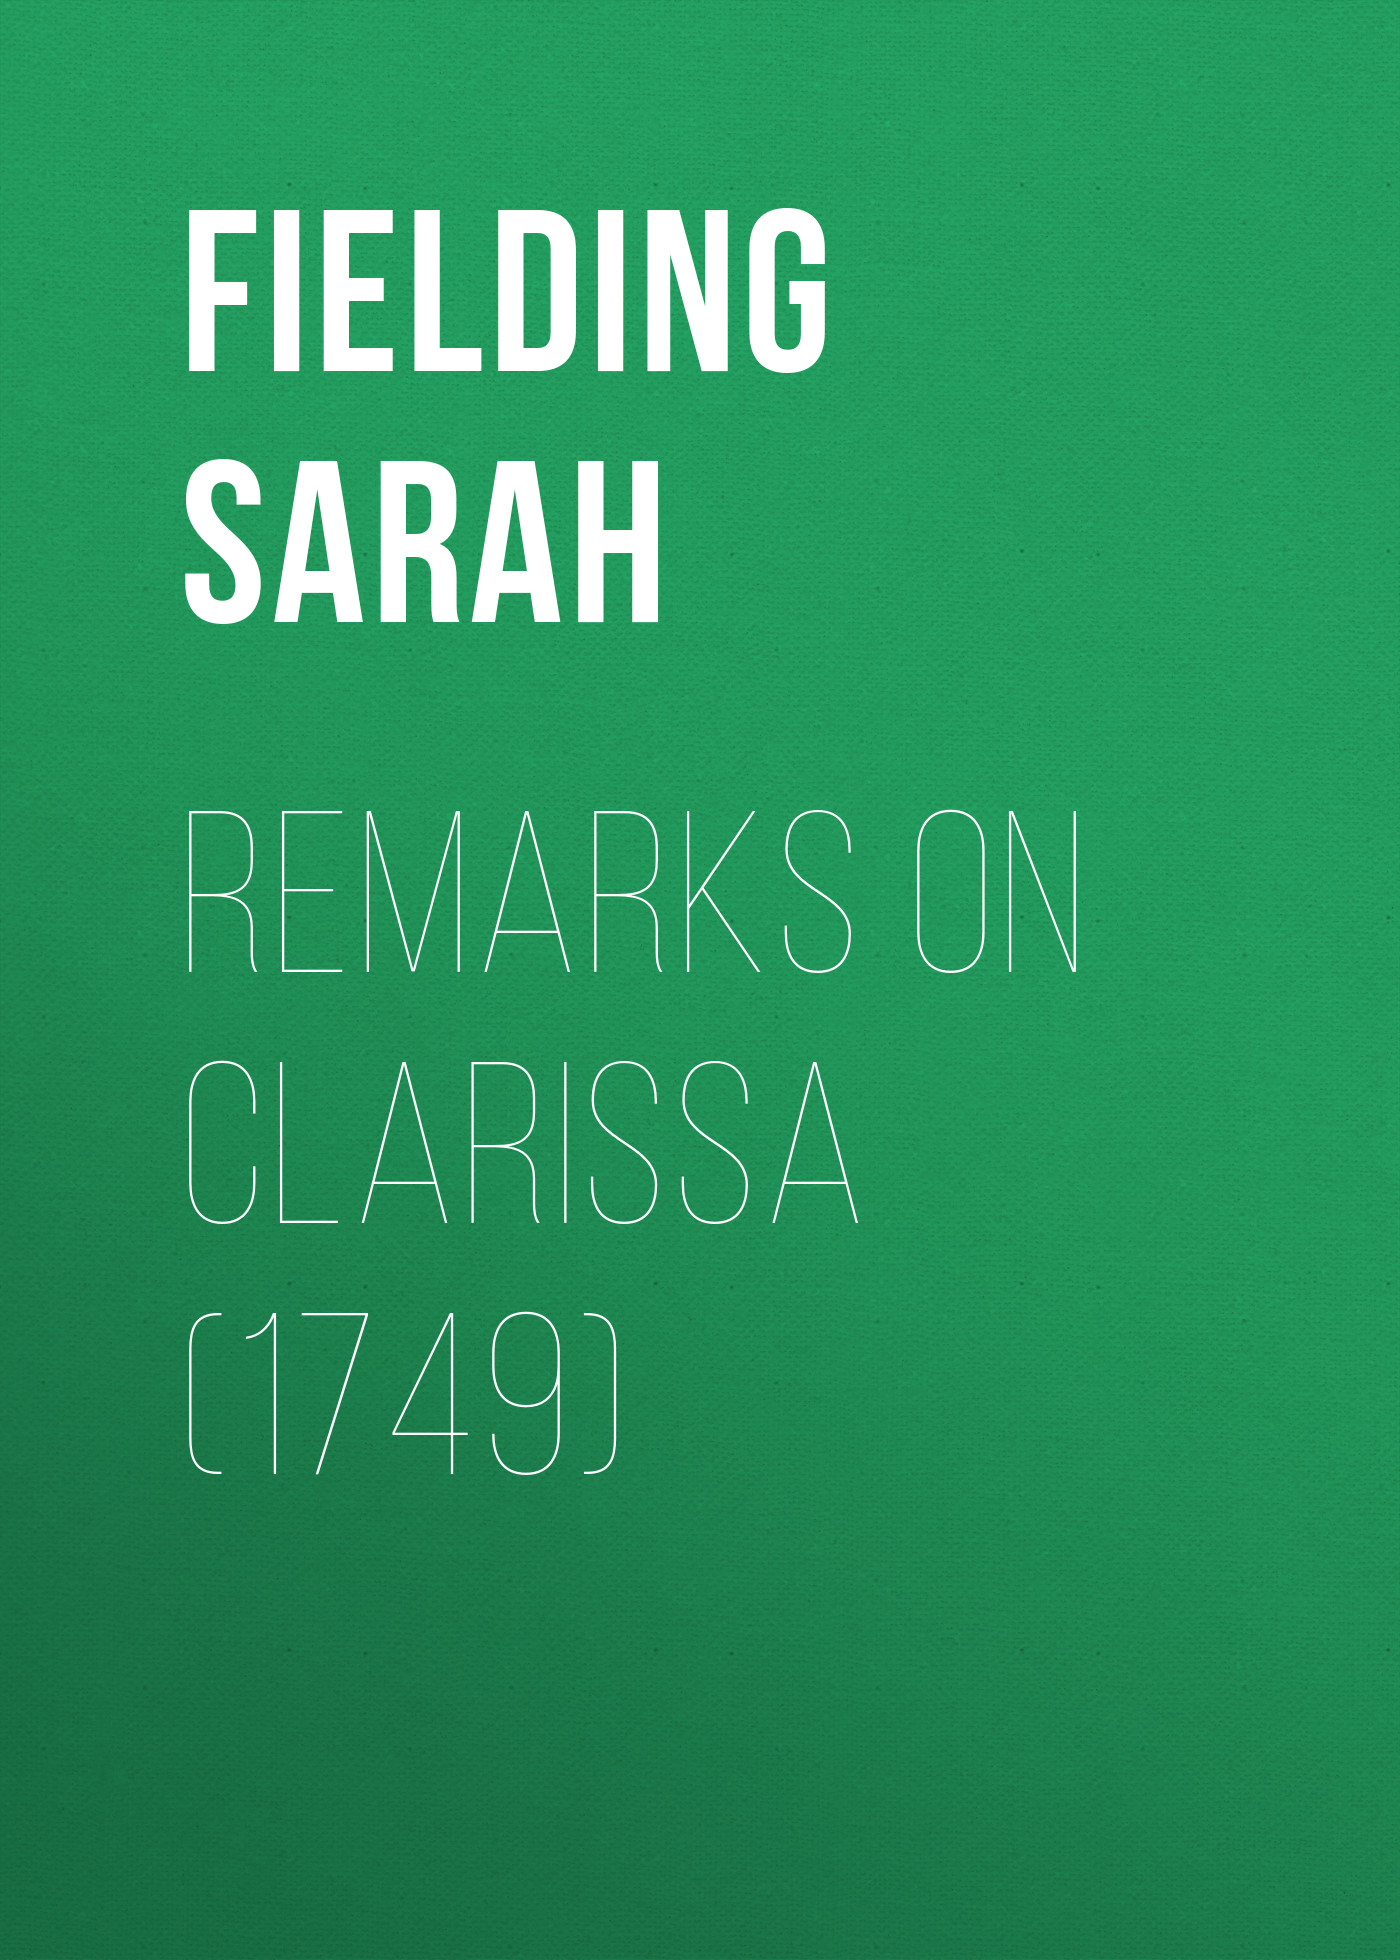 Fielding Sarah Remarks on Clarissa (1749)